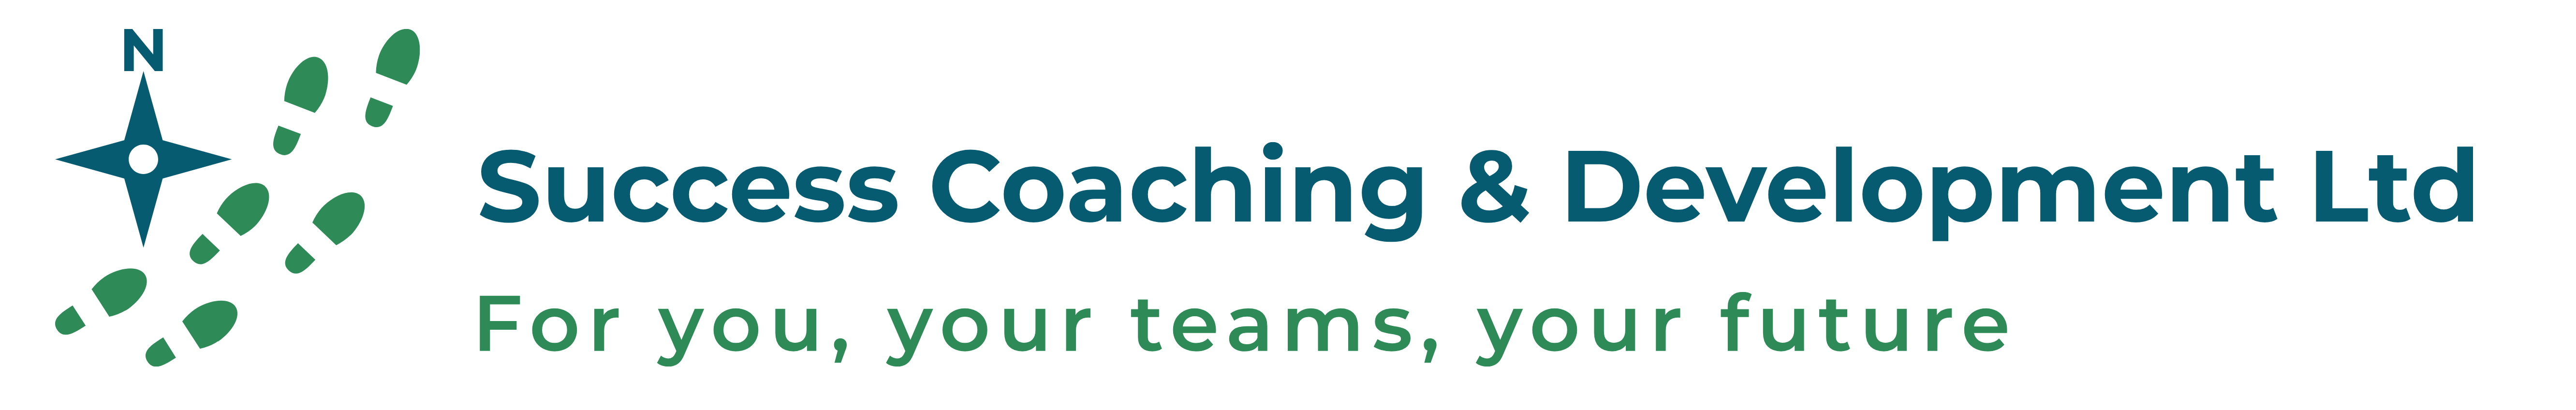 Success Coaching & Development Ltd